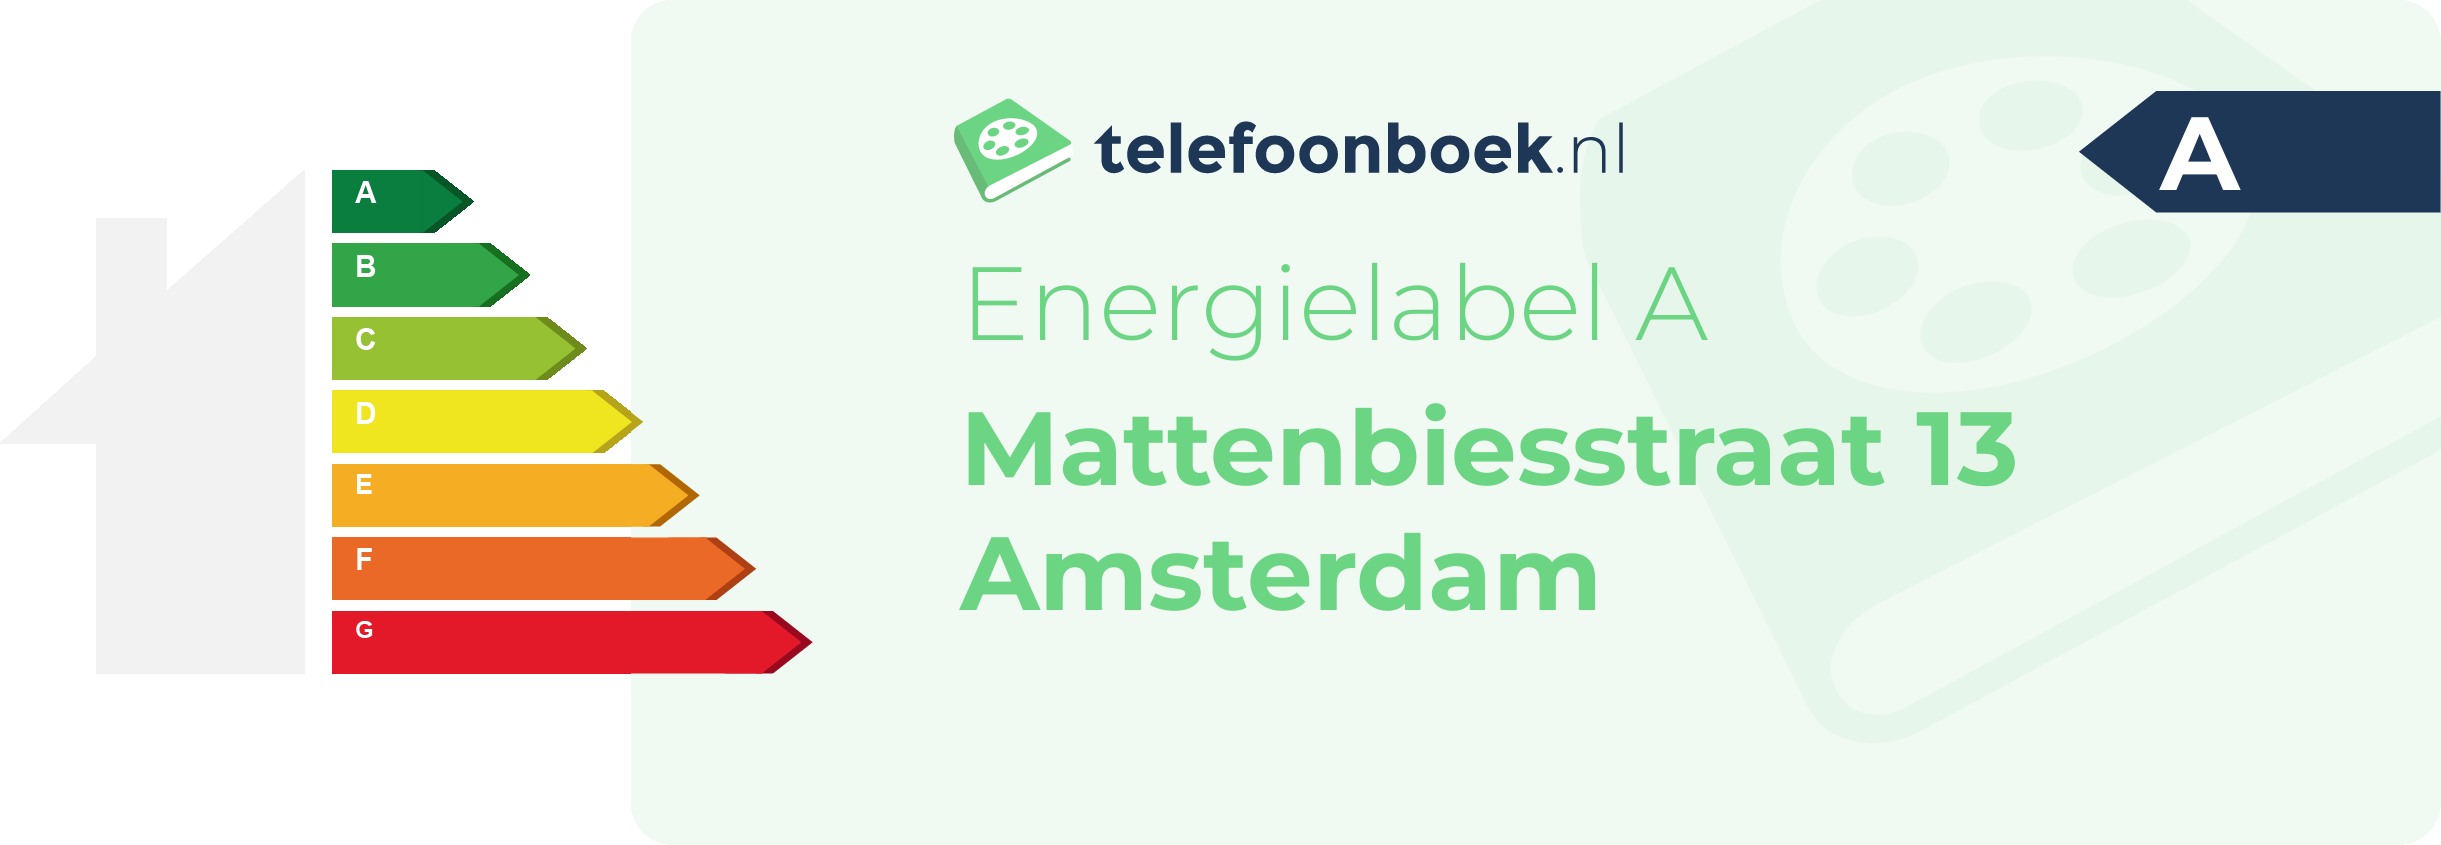 Energielabel Mattenbiesstraat 13 Amsterdam